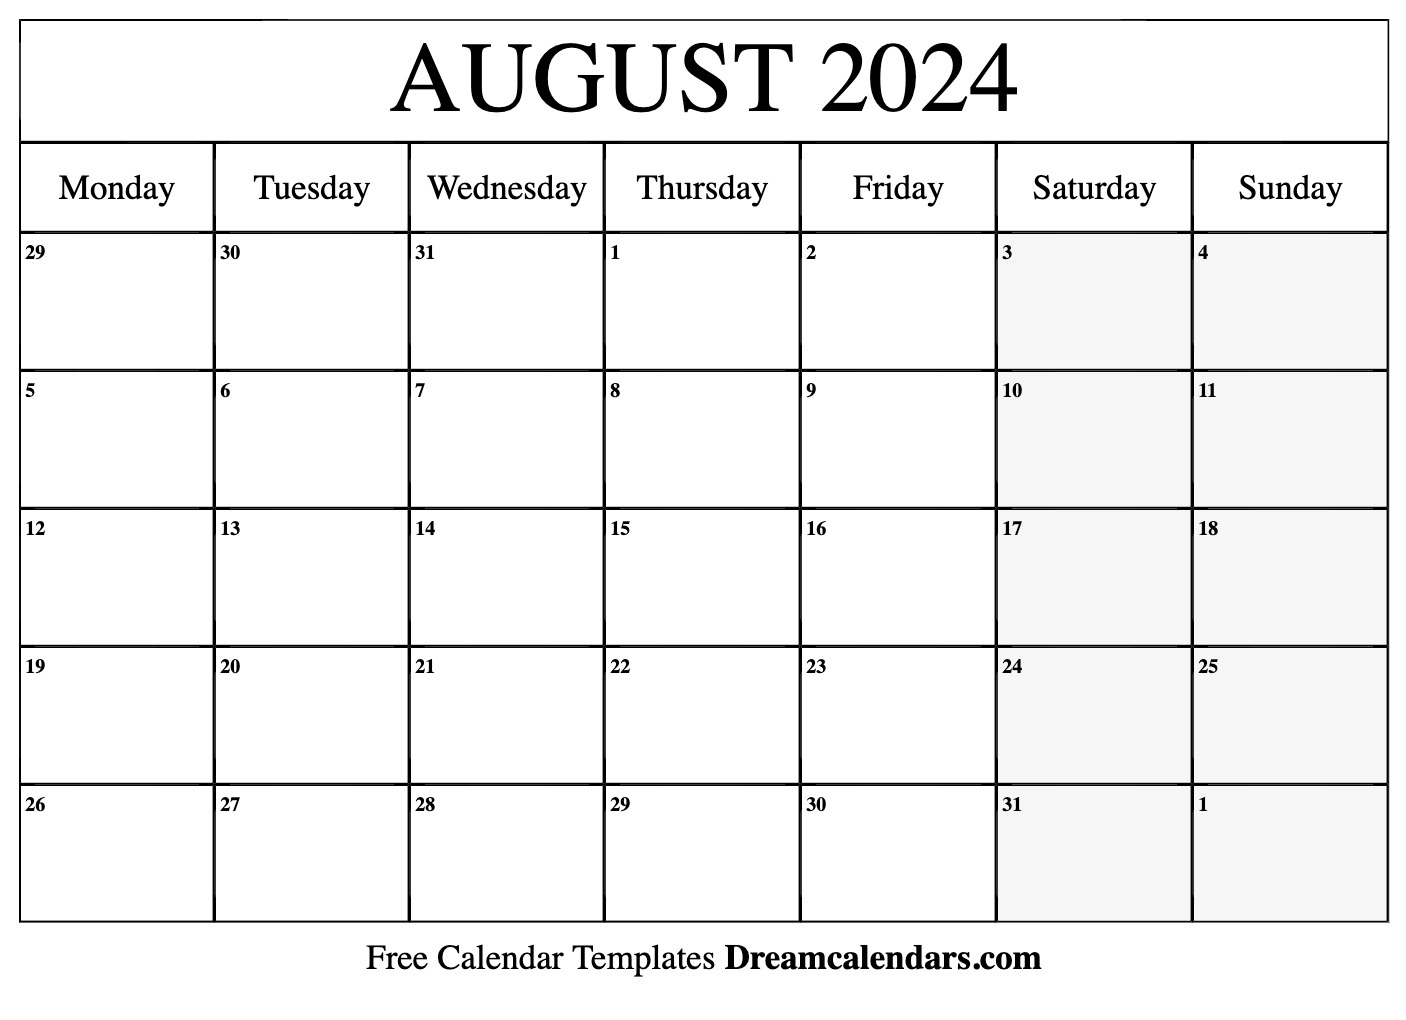 Free August 2024 Calendar Audra Candide - Free Printable 2024 August Calendar